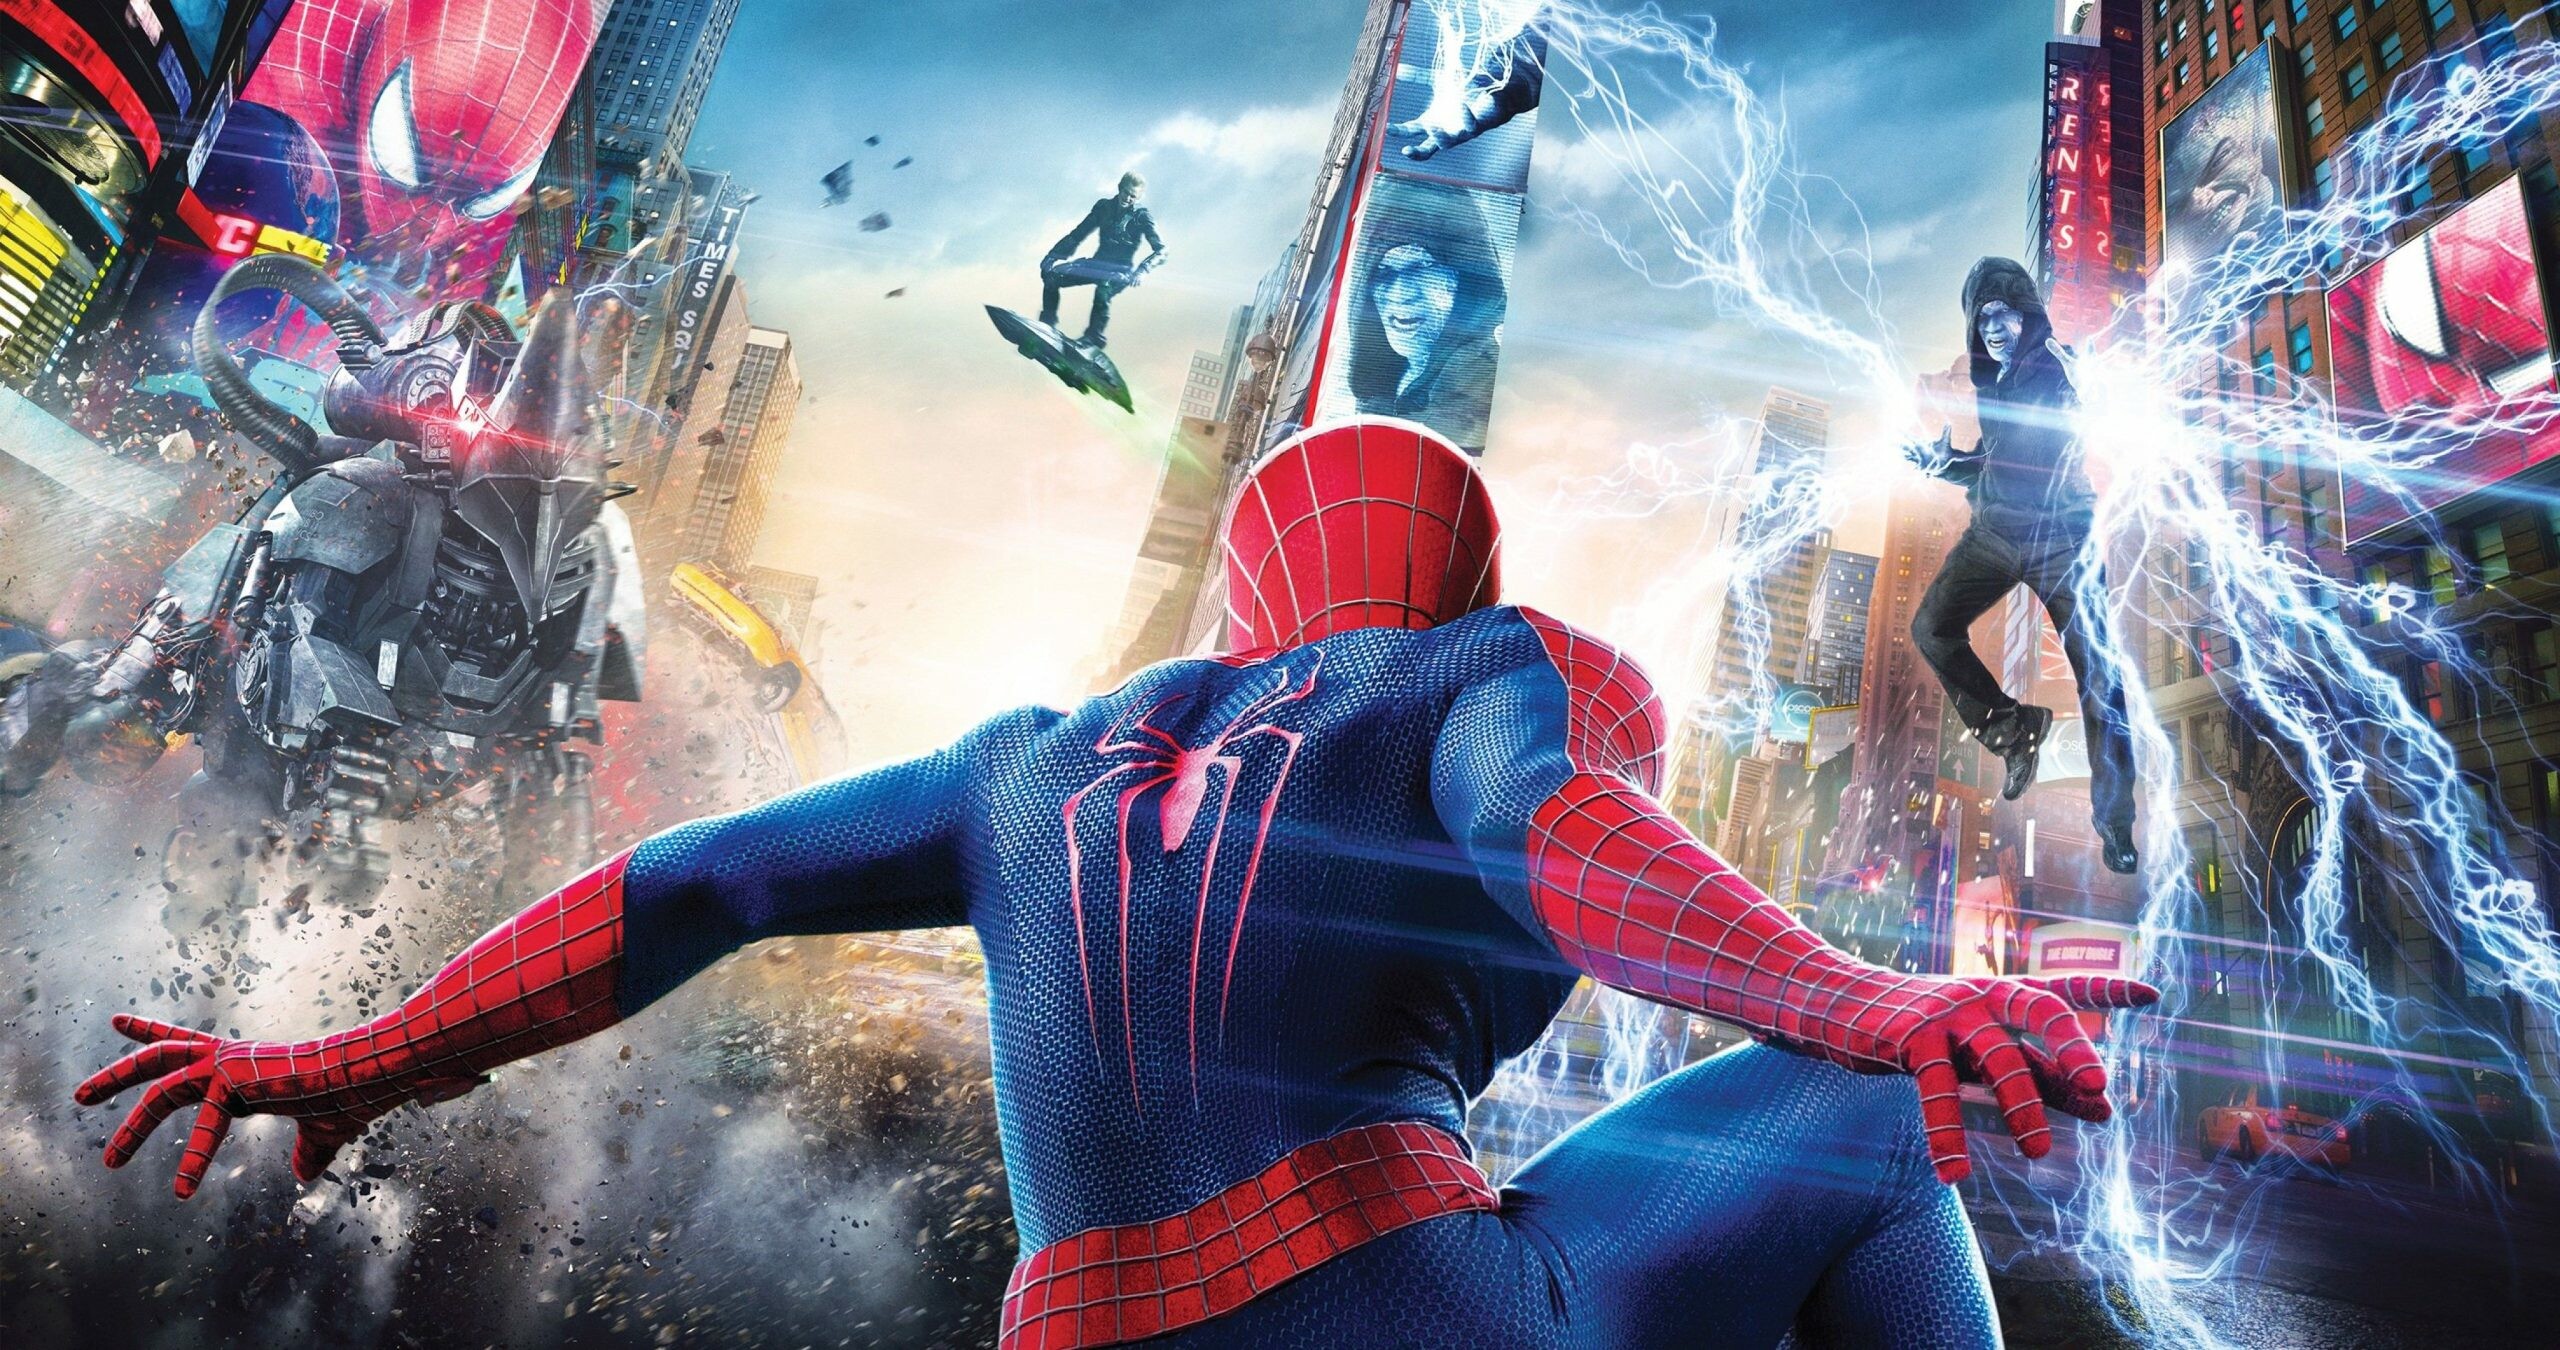 Marvel: The Amazing Spider-Man, Jamie Foxx as Electro, Dane DeHaan as Green Goblin. 2560x1350 HD Wallpaper.